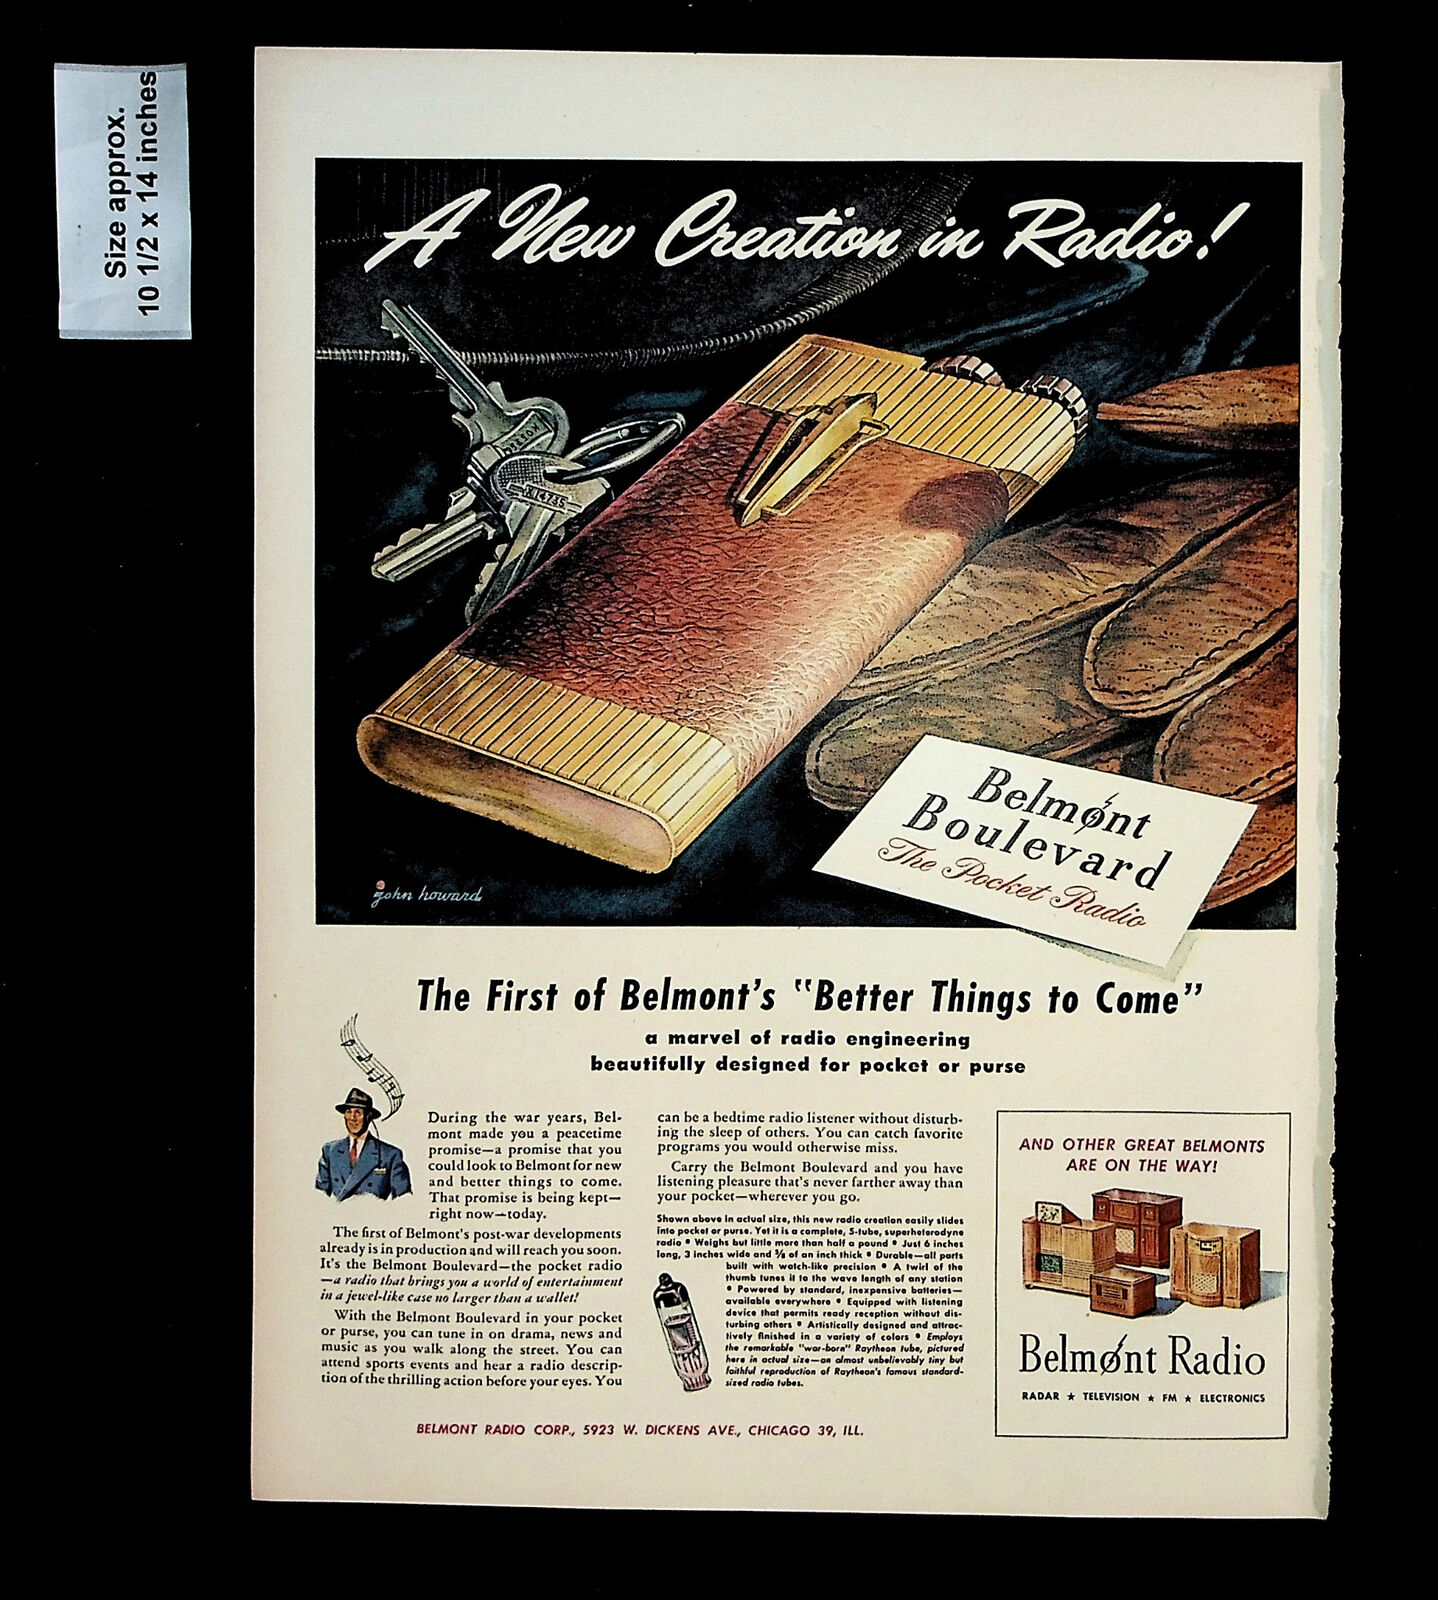 Vintage ad for Belmont slimline pocket radio. Illustrated by John C Howard. 1940s.